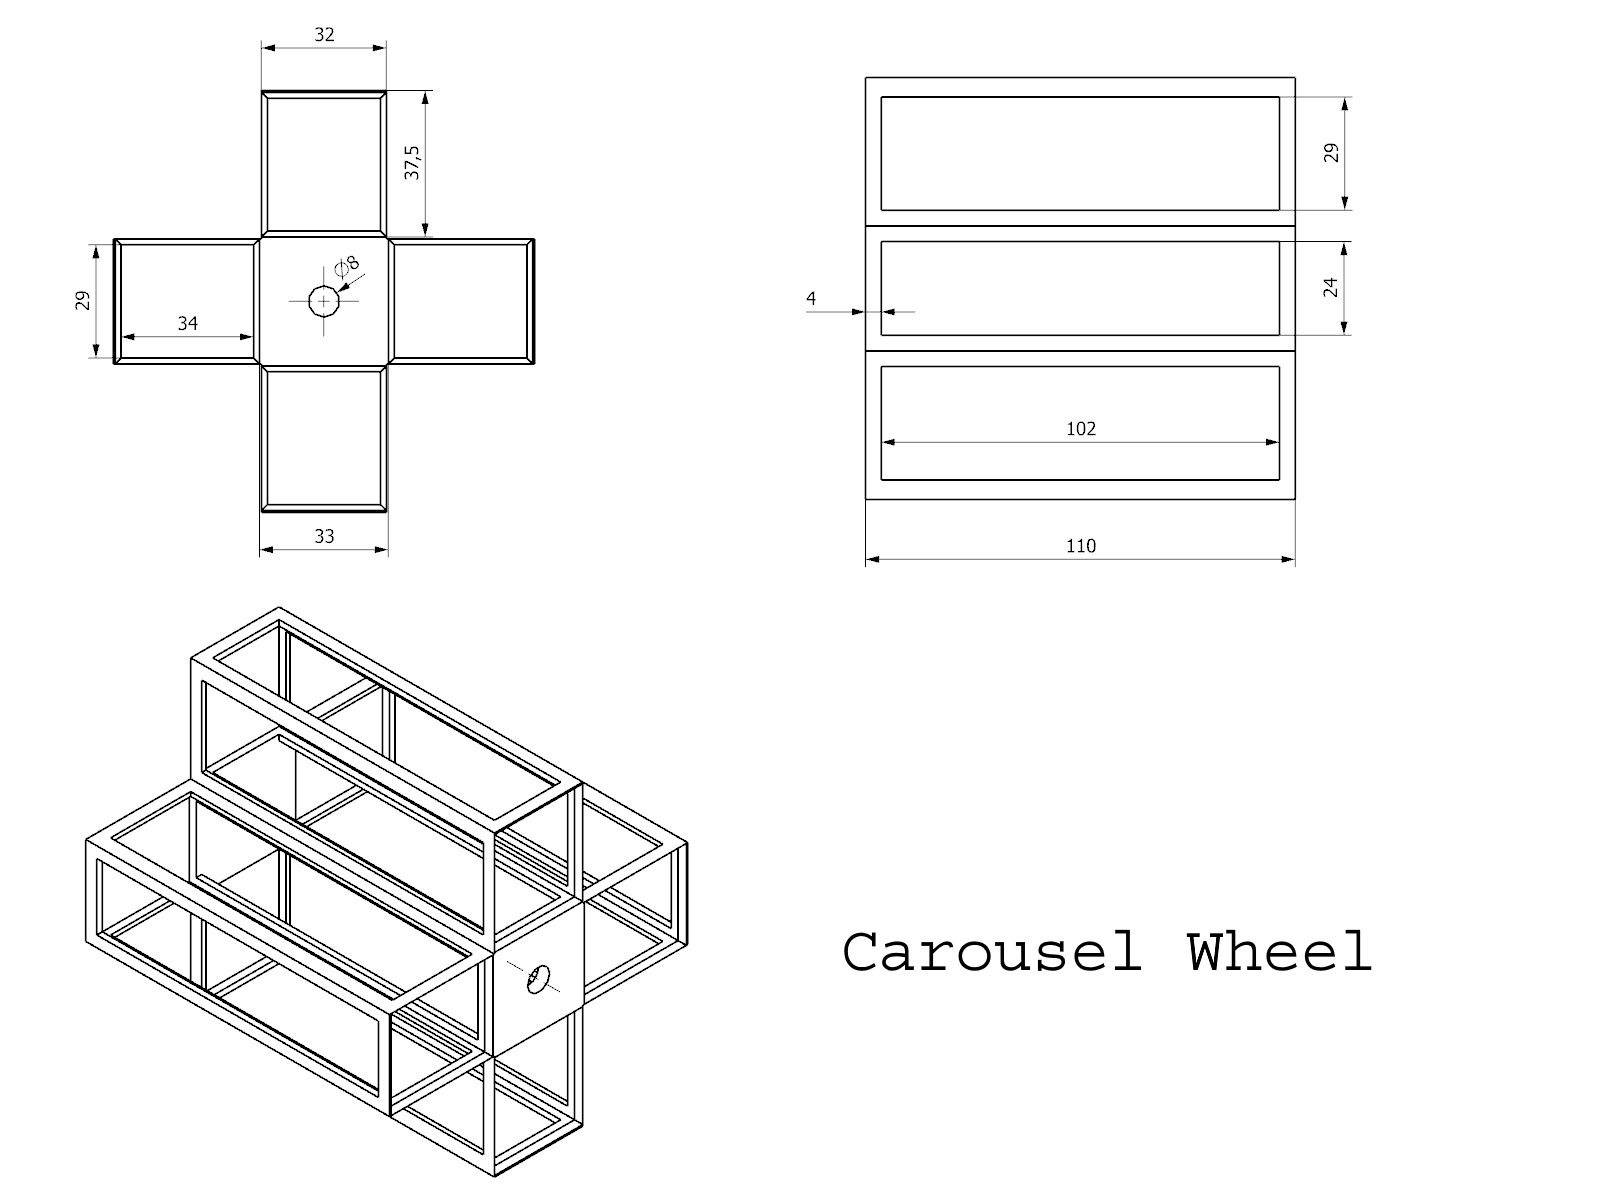 Carousel wheel